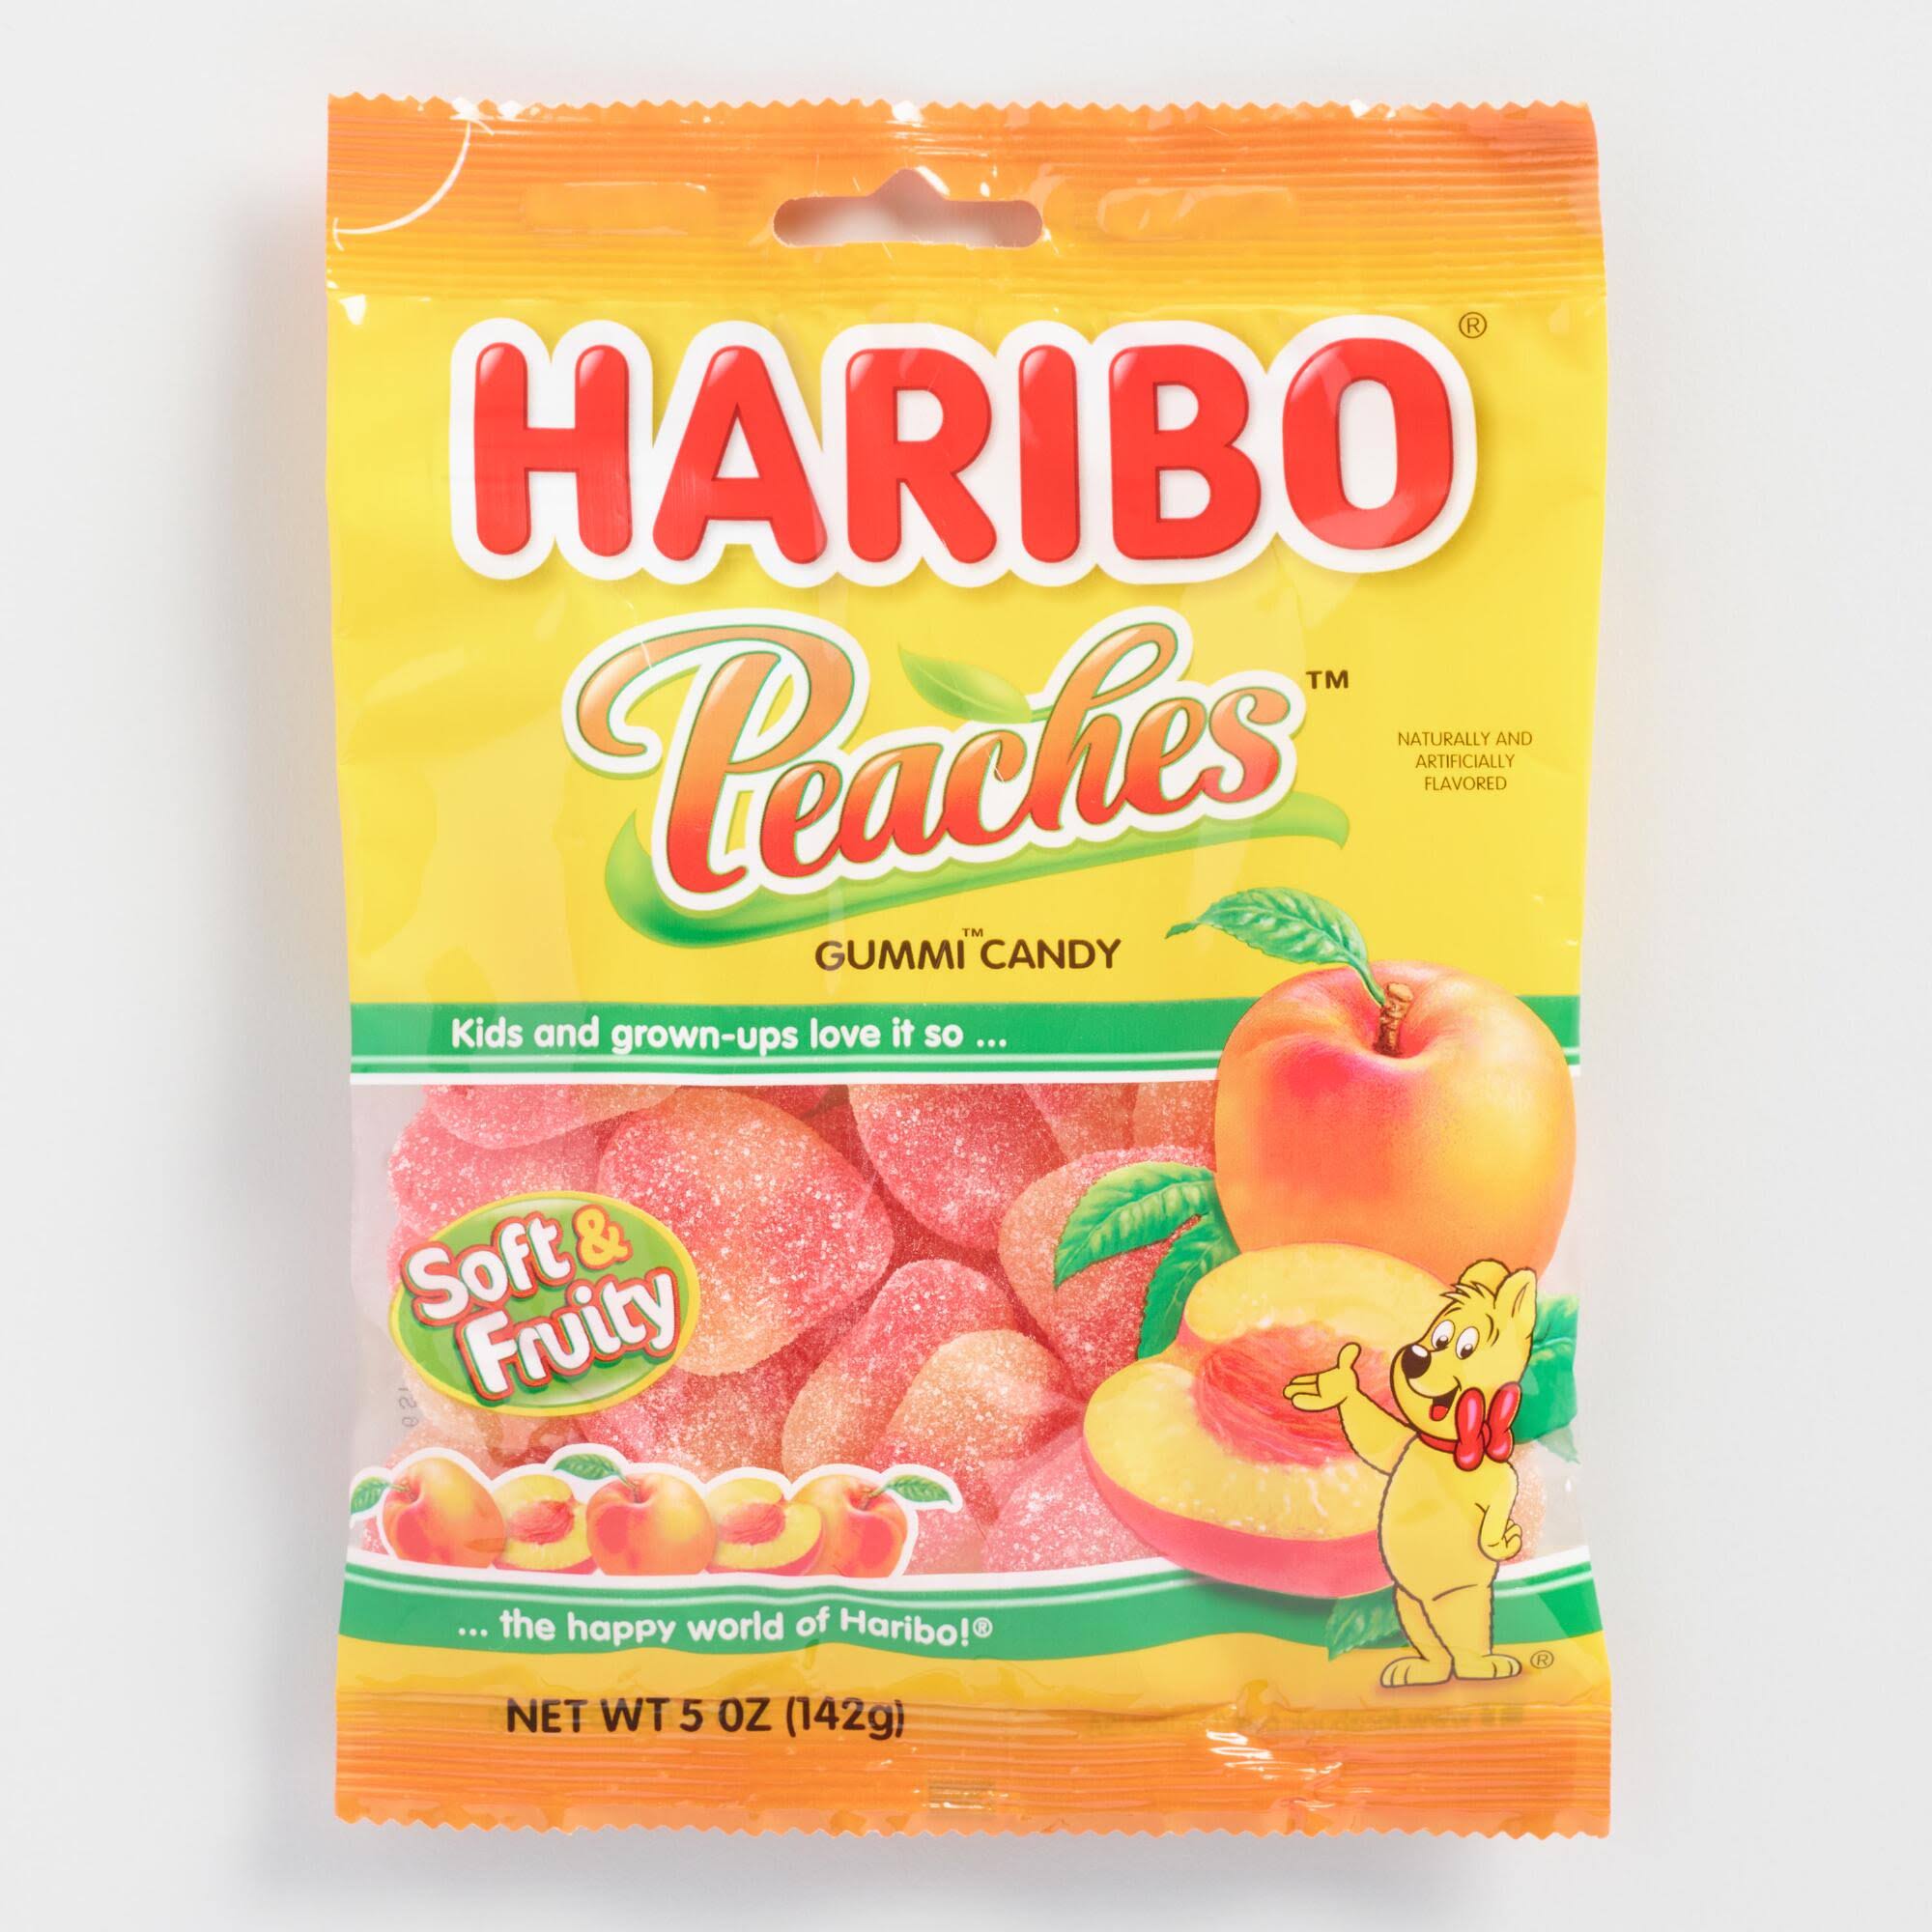 Haribo Gummi Candy - Peaches, 5oz